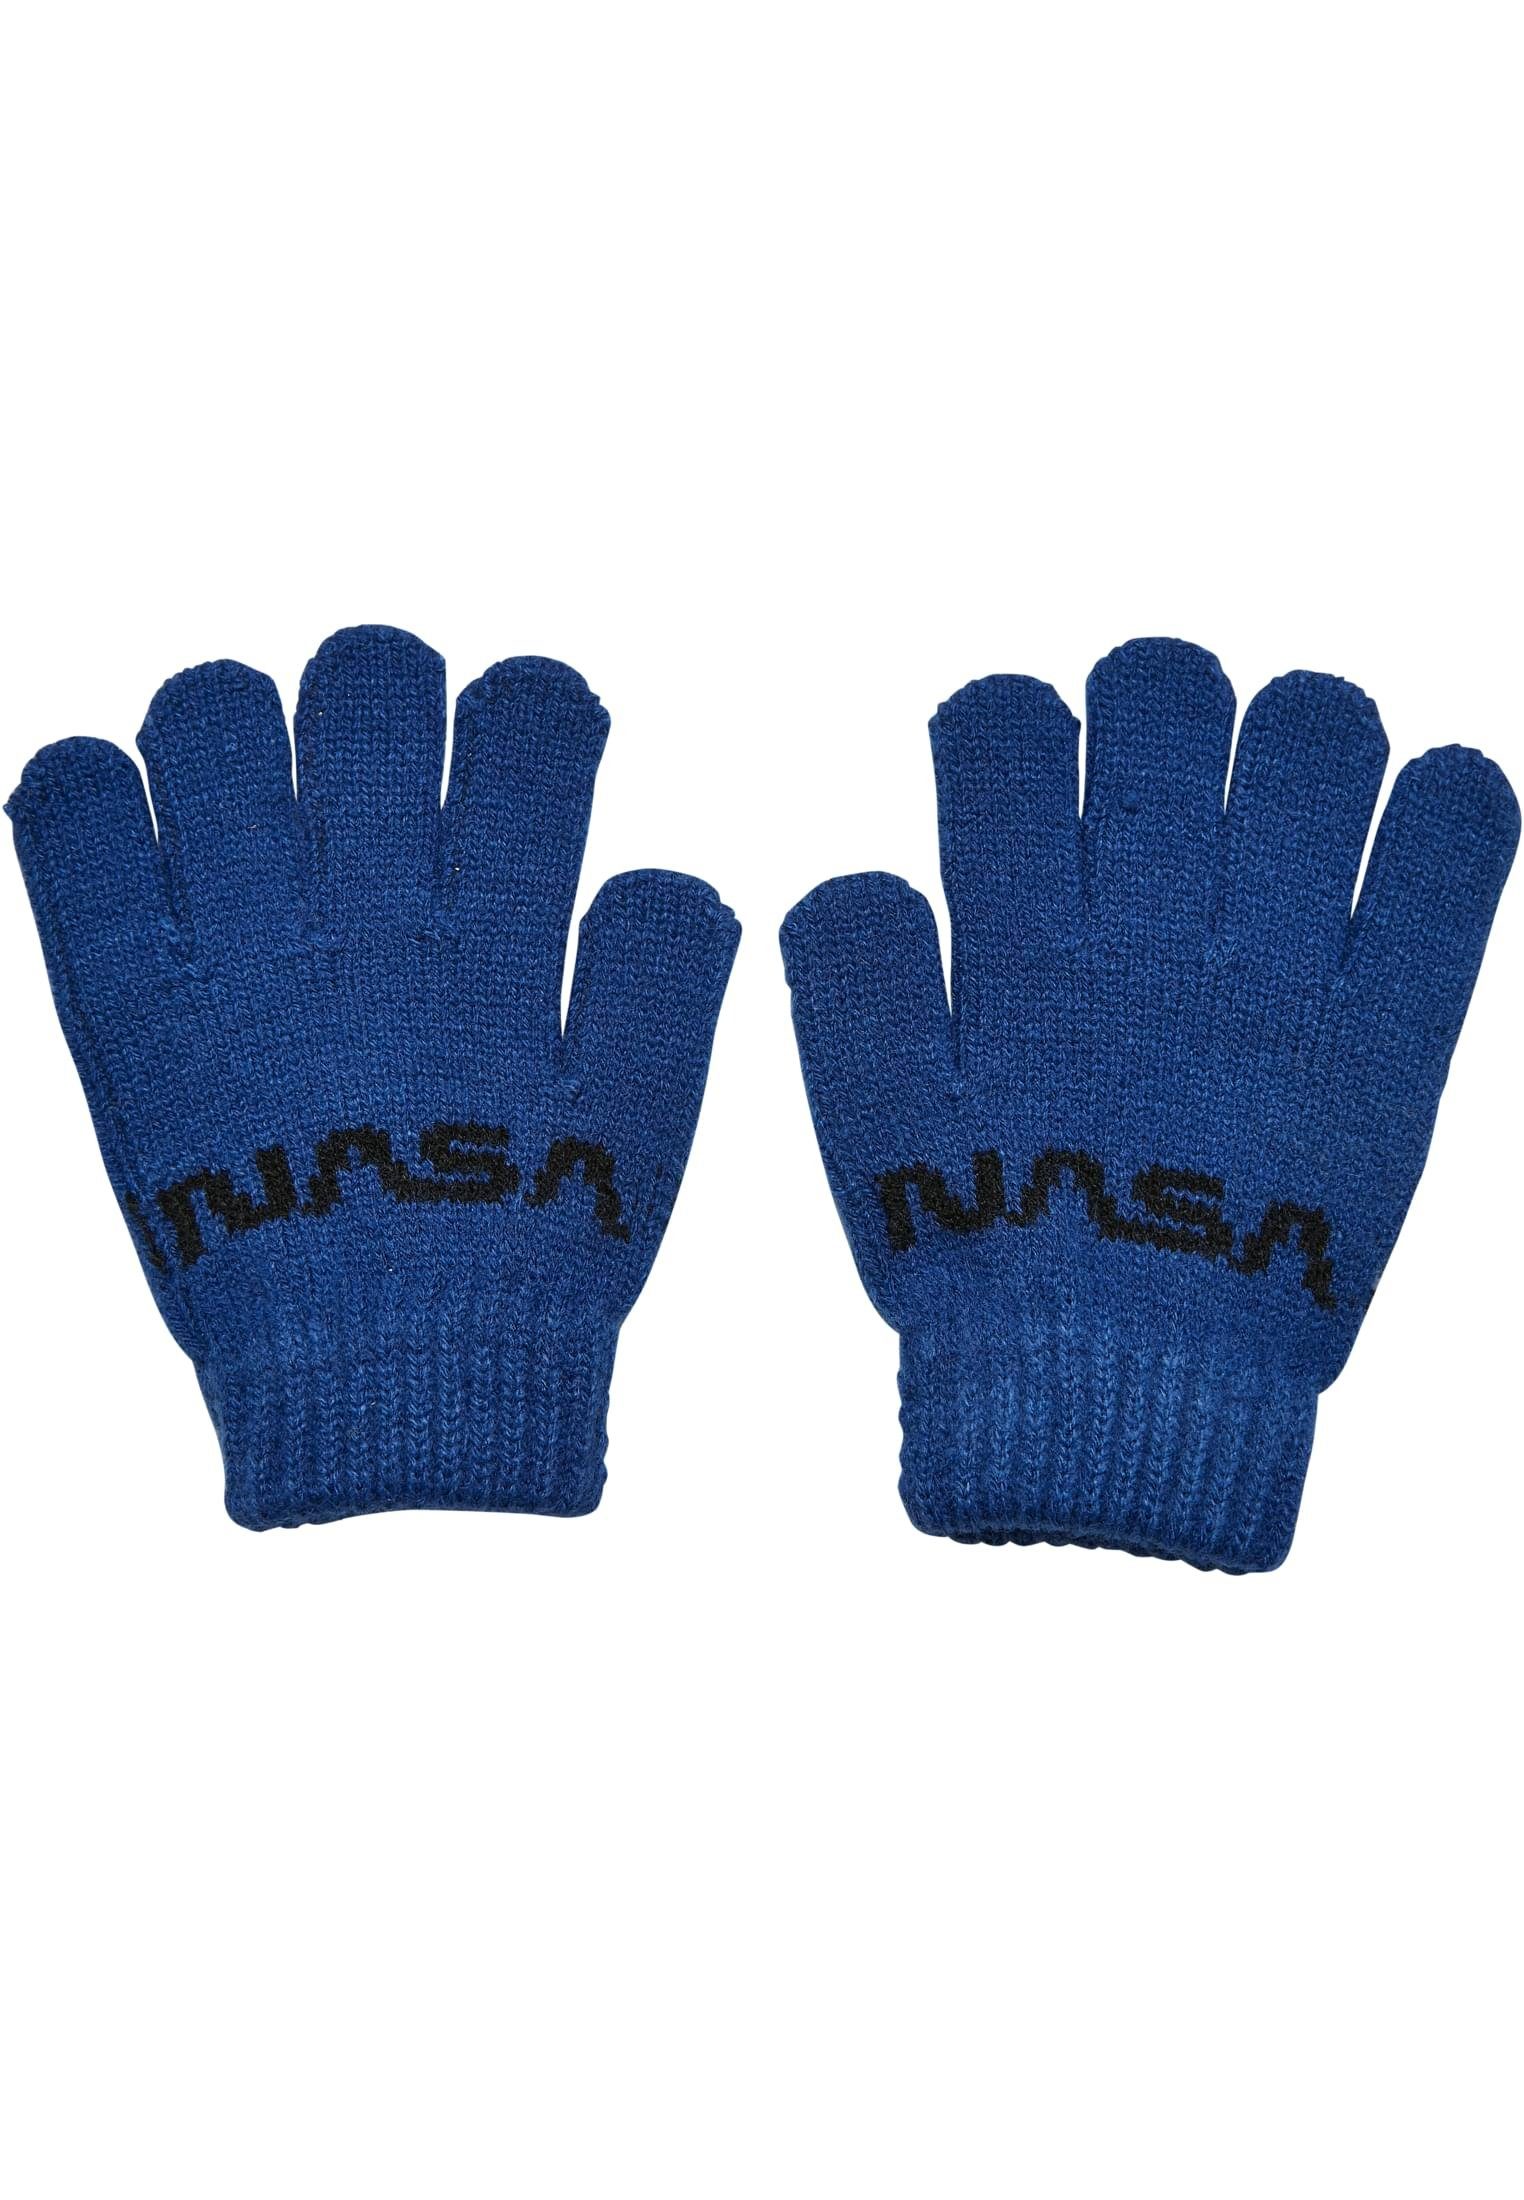 Mister NASA Knit Accessoires Tee Baumwollhandschuhe MisterTee Kids Glove royal